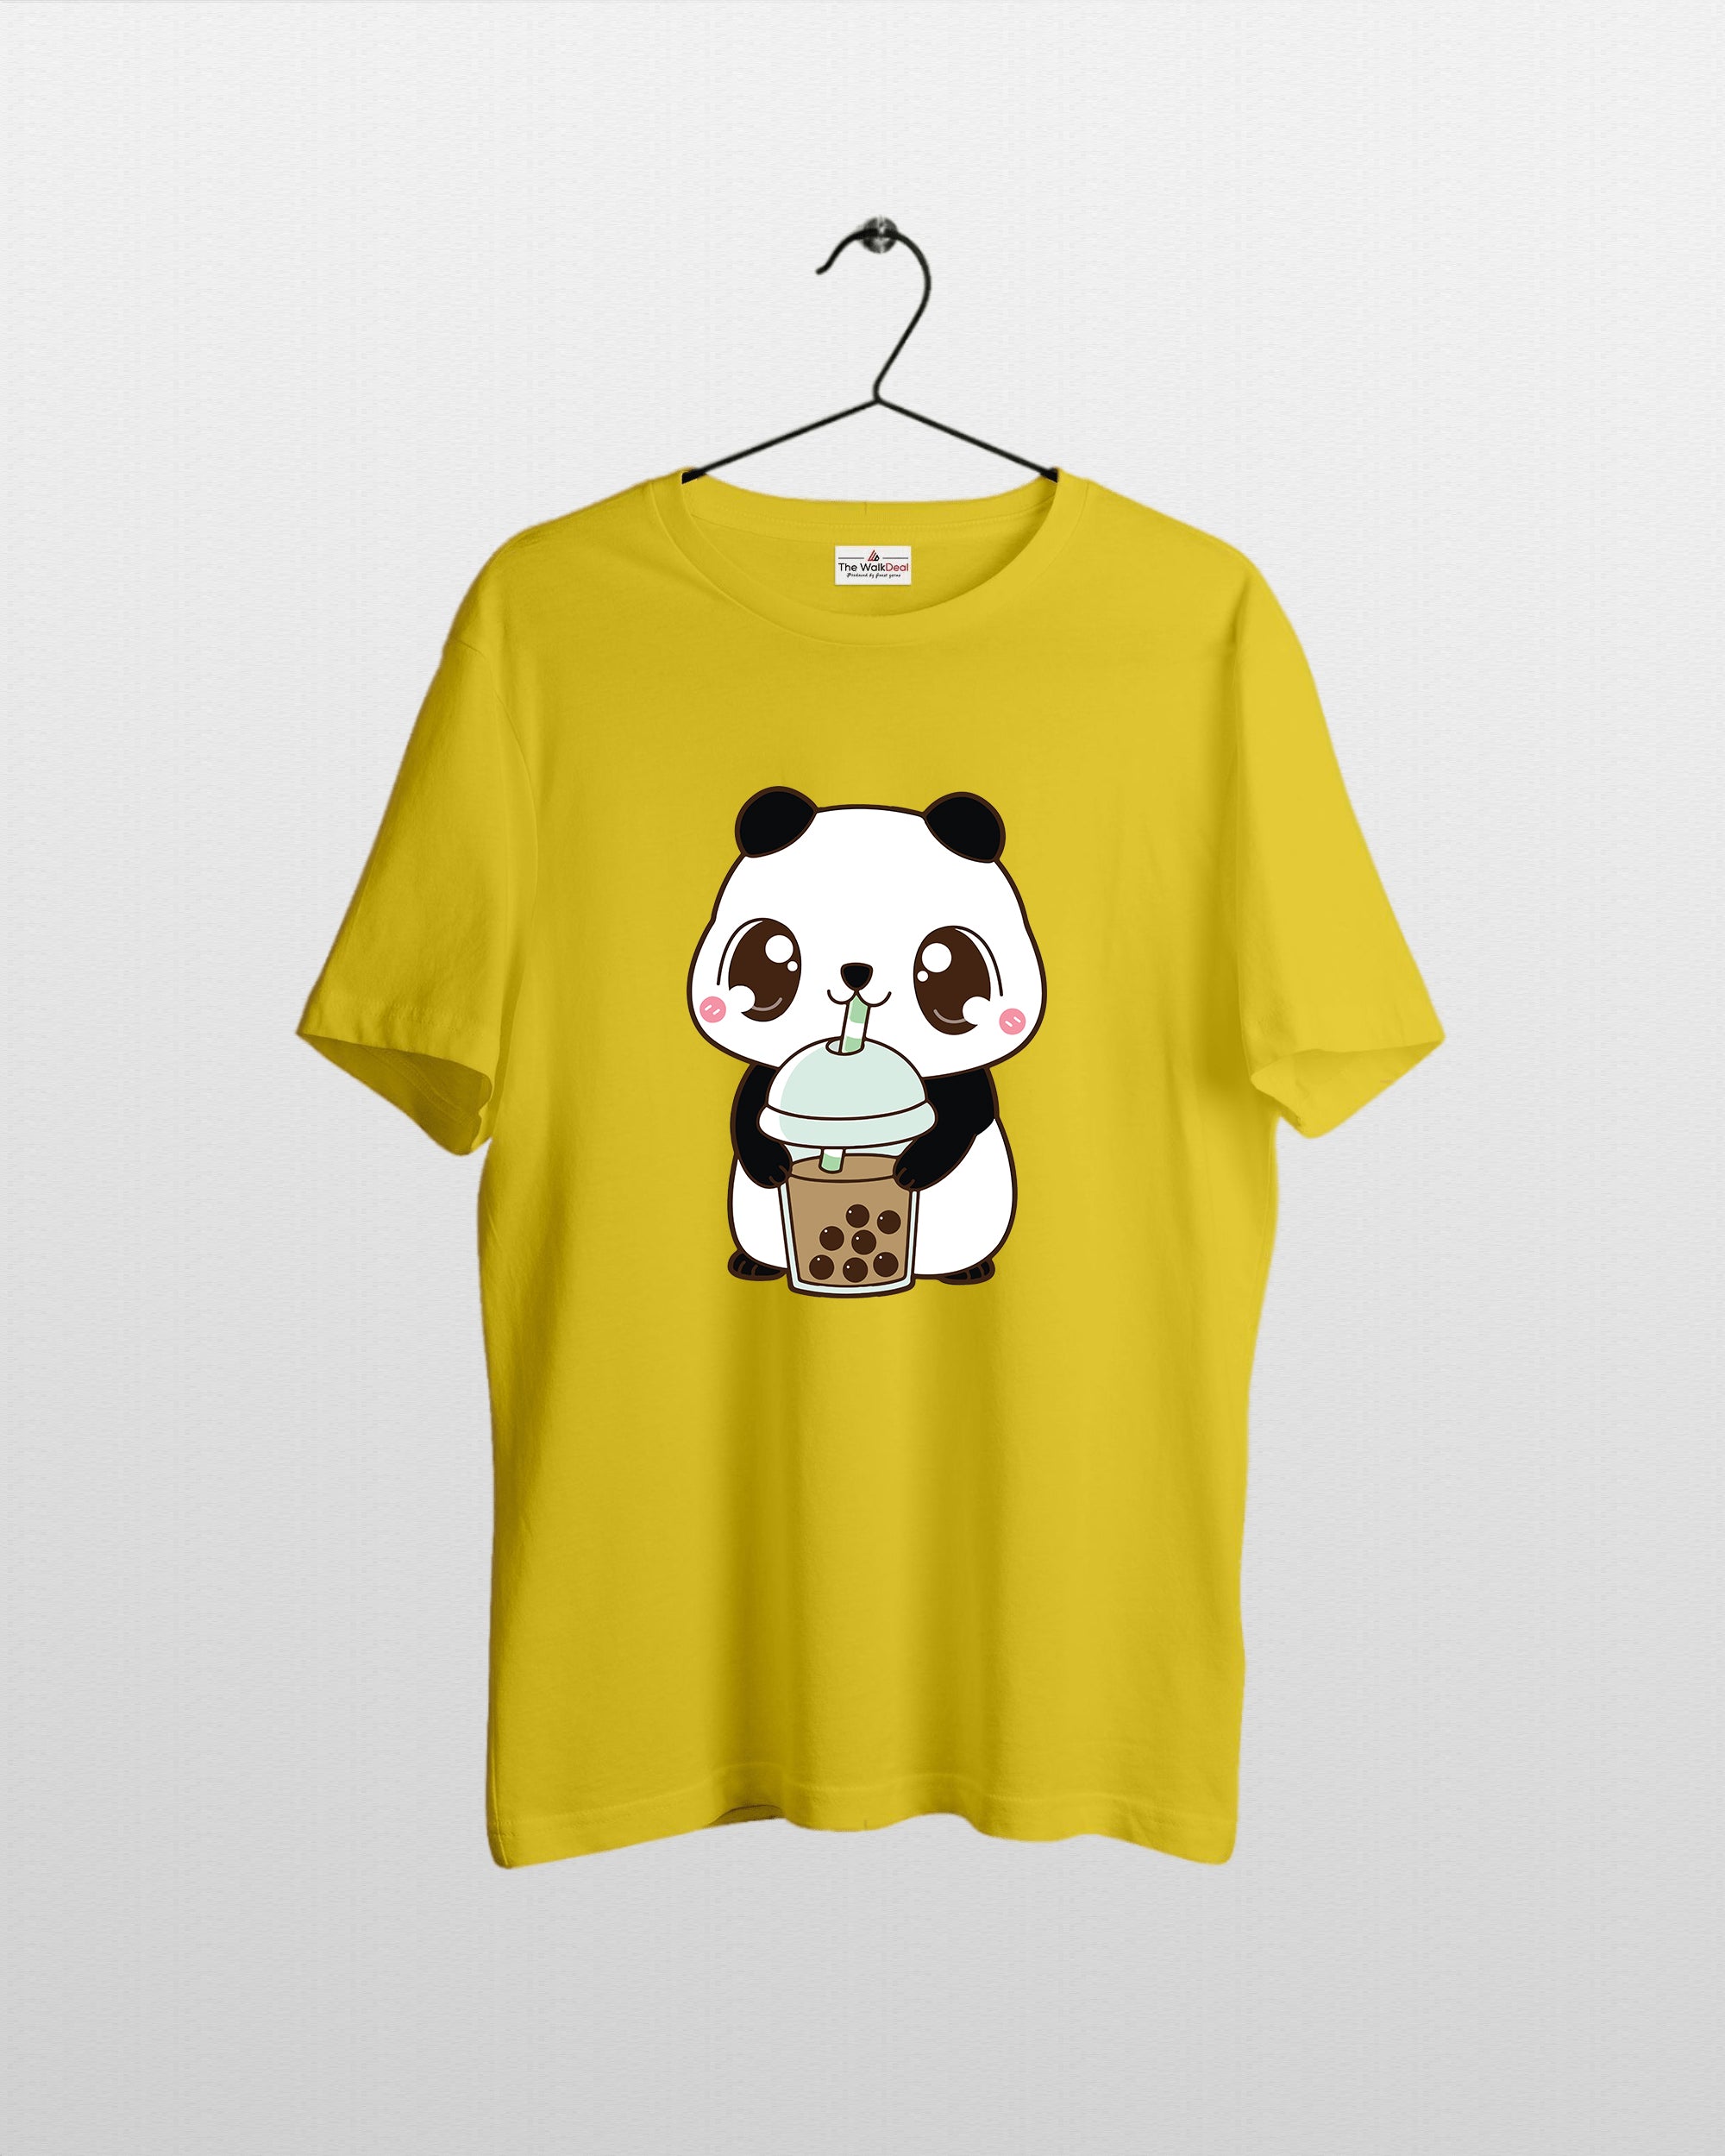 Panda T-Shirts For Men || Yellow || Stylish Tshirts || 100% Cotton || Best T-Shirt For Men's